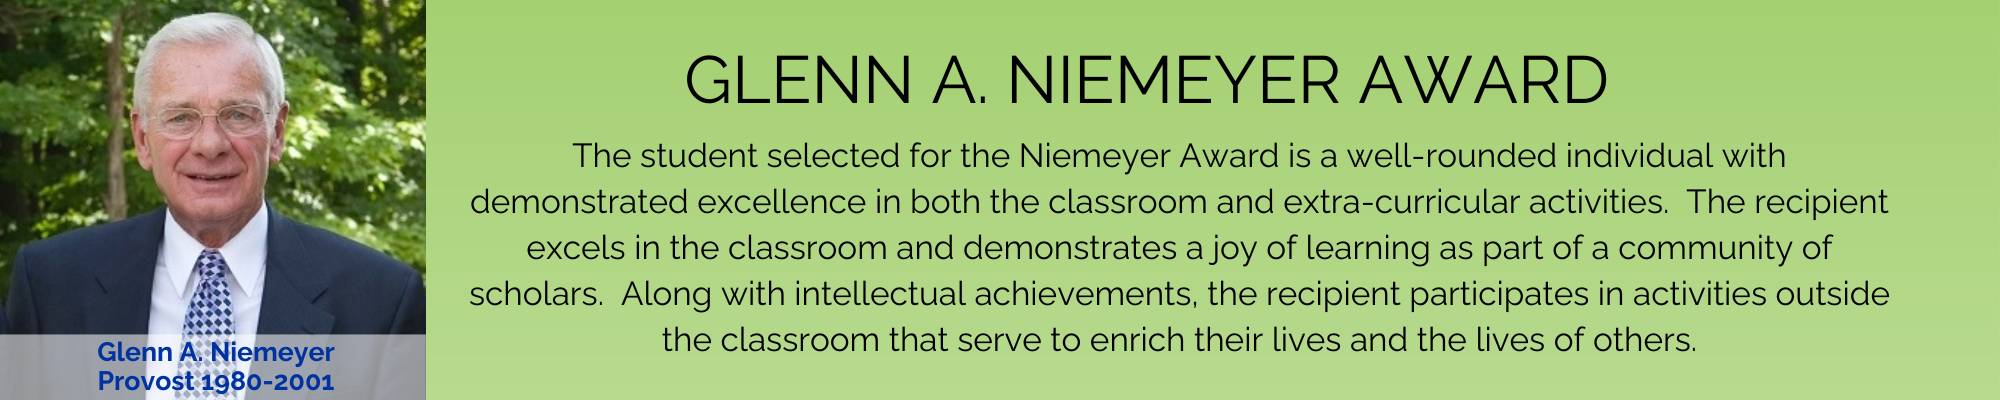 Glenn A. Niemeyer Award